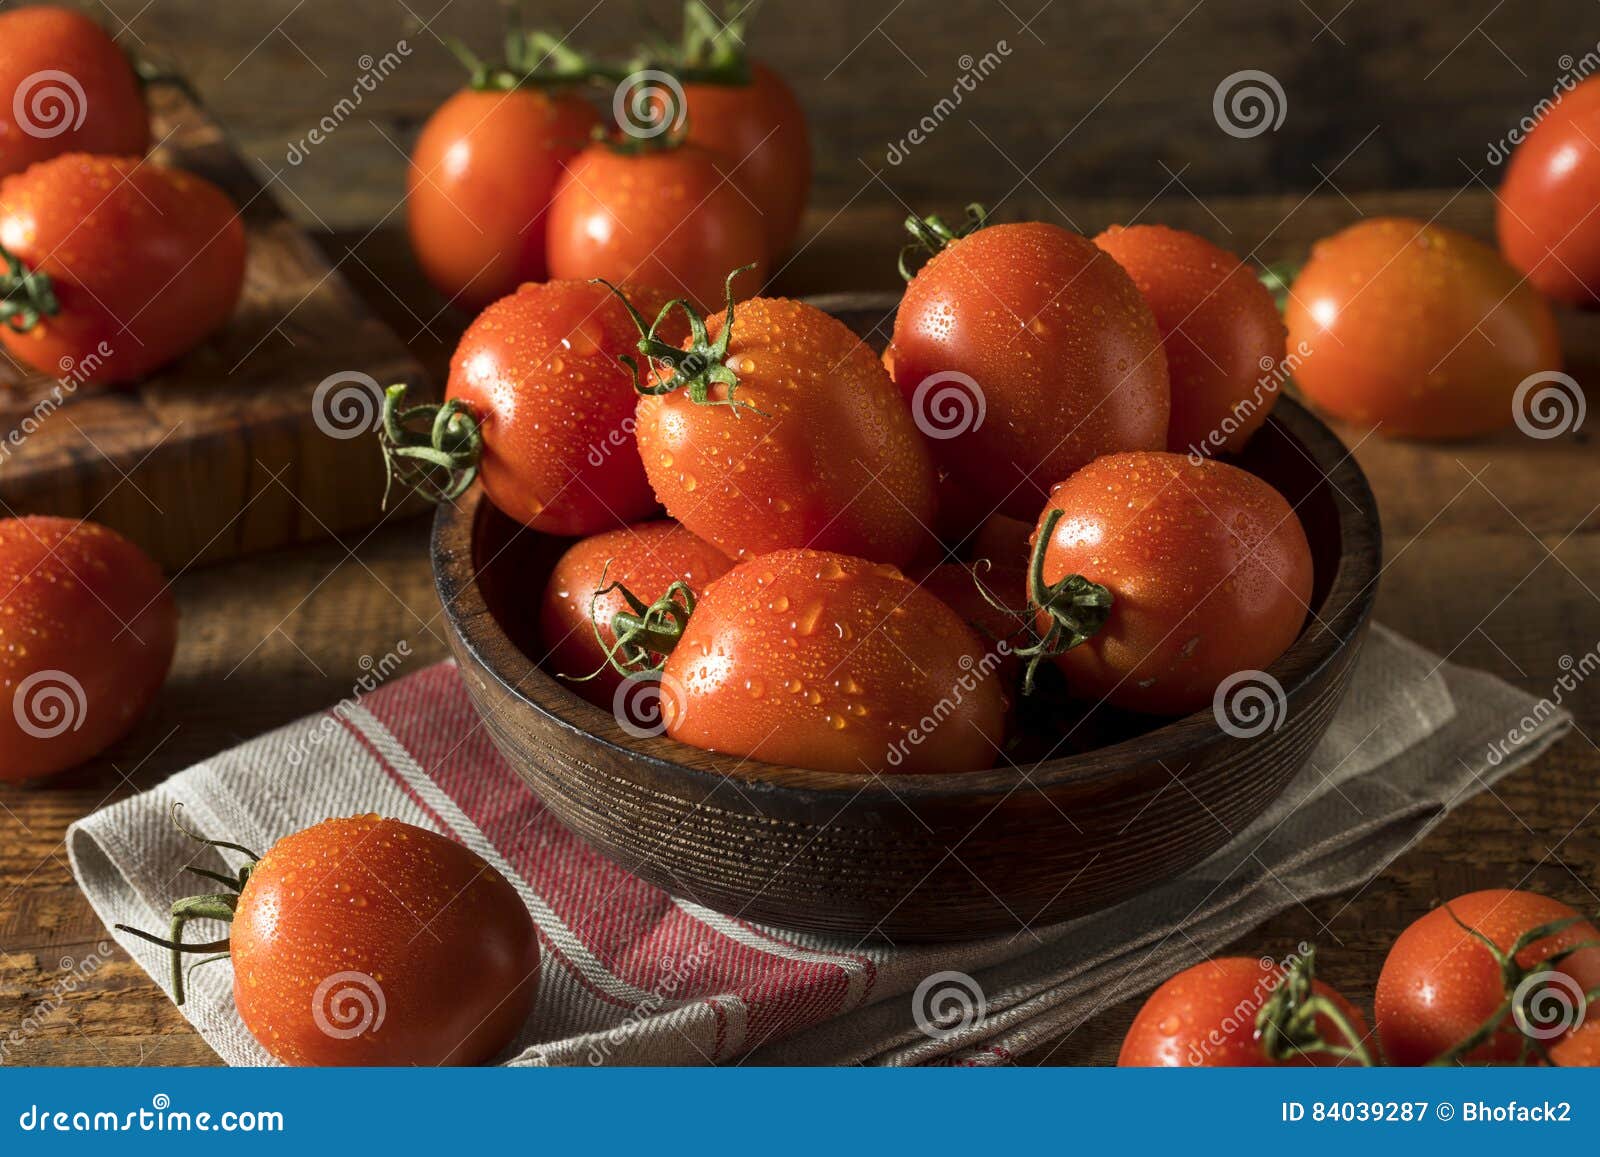 raw red organic roma tomatoes